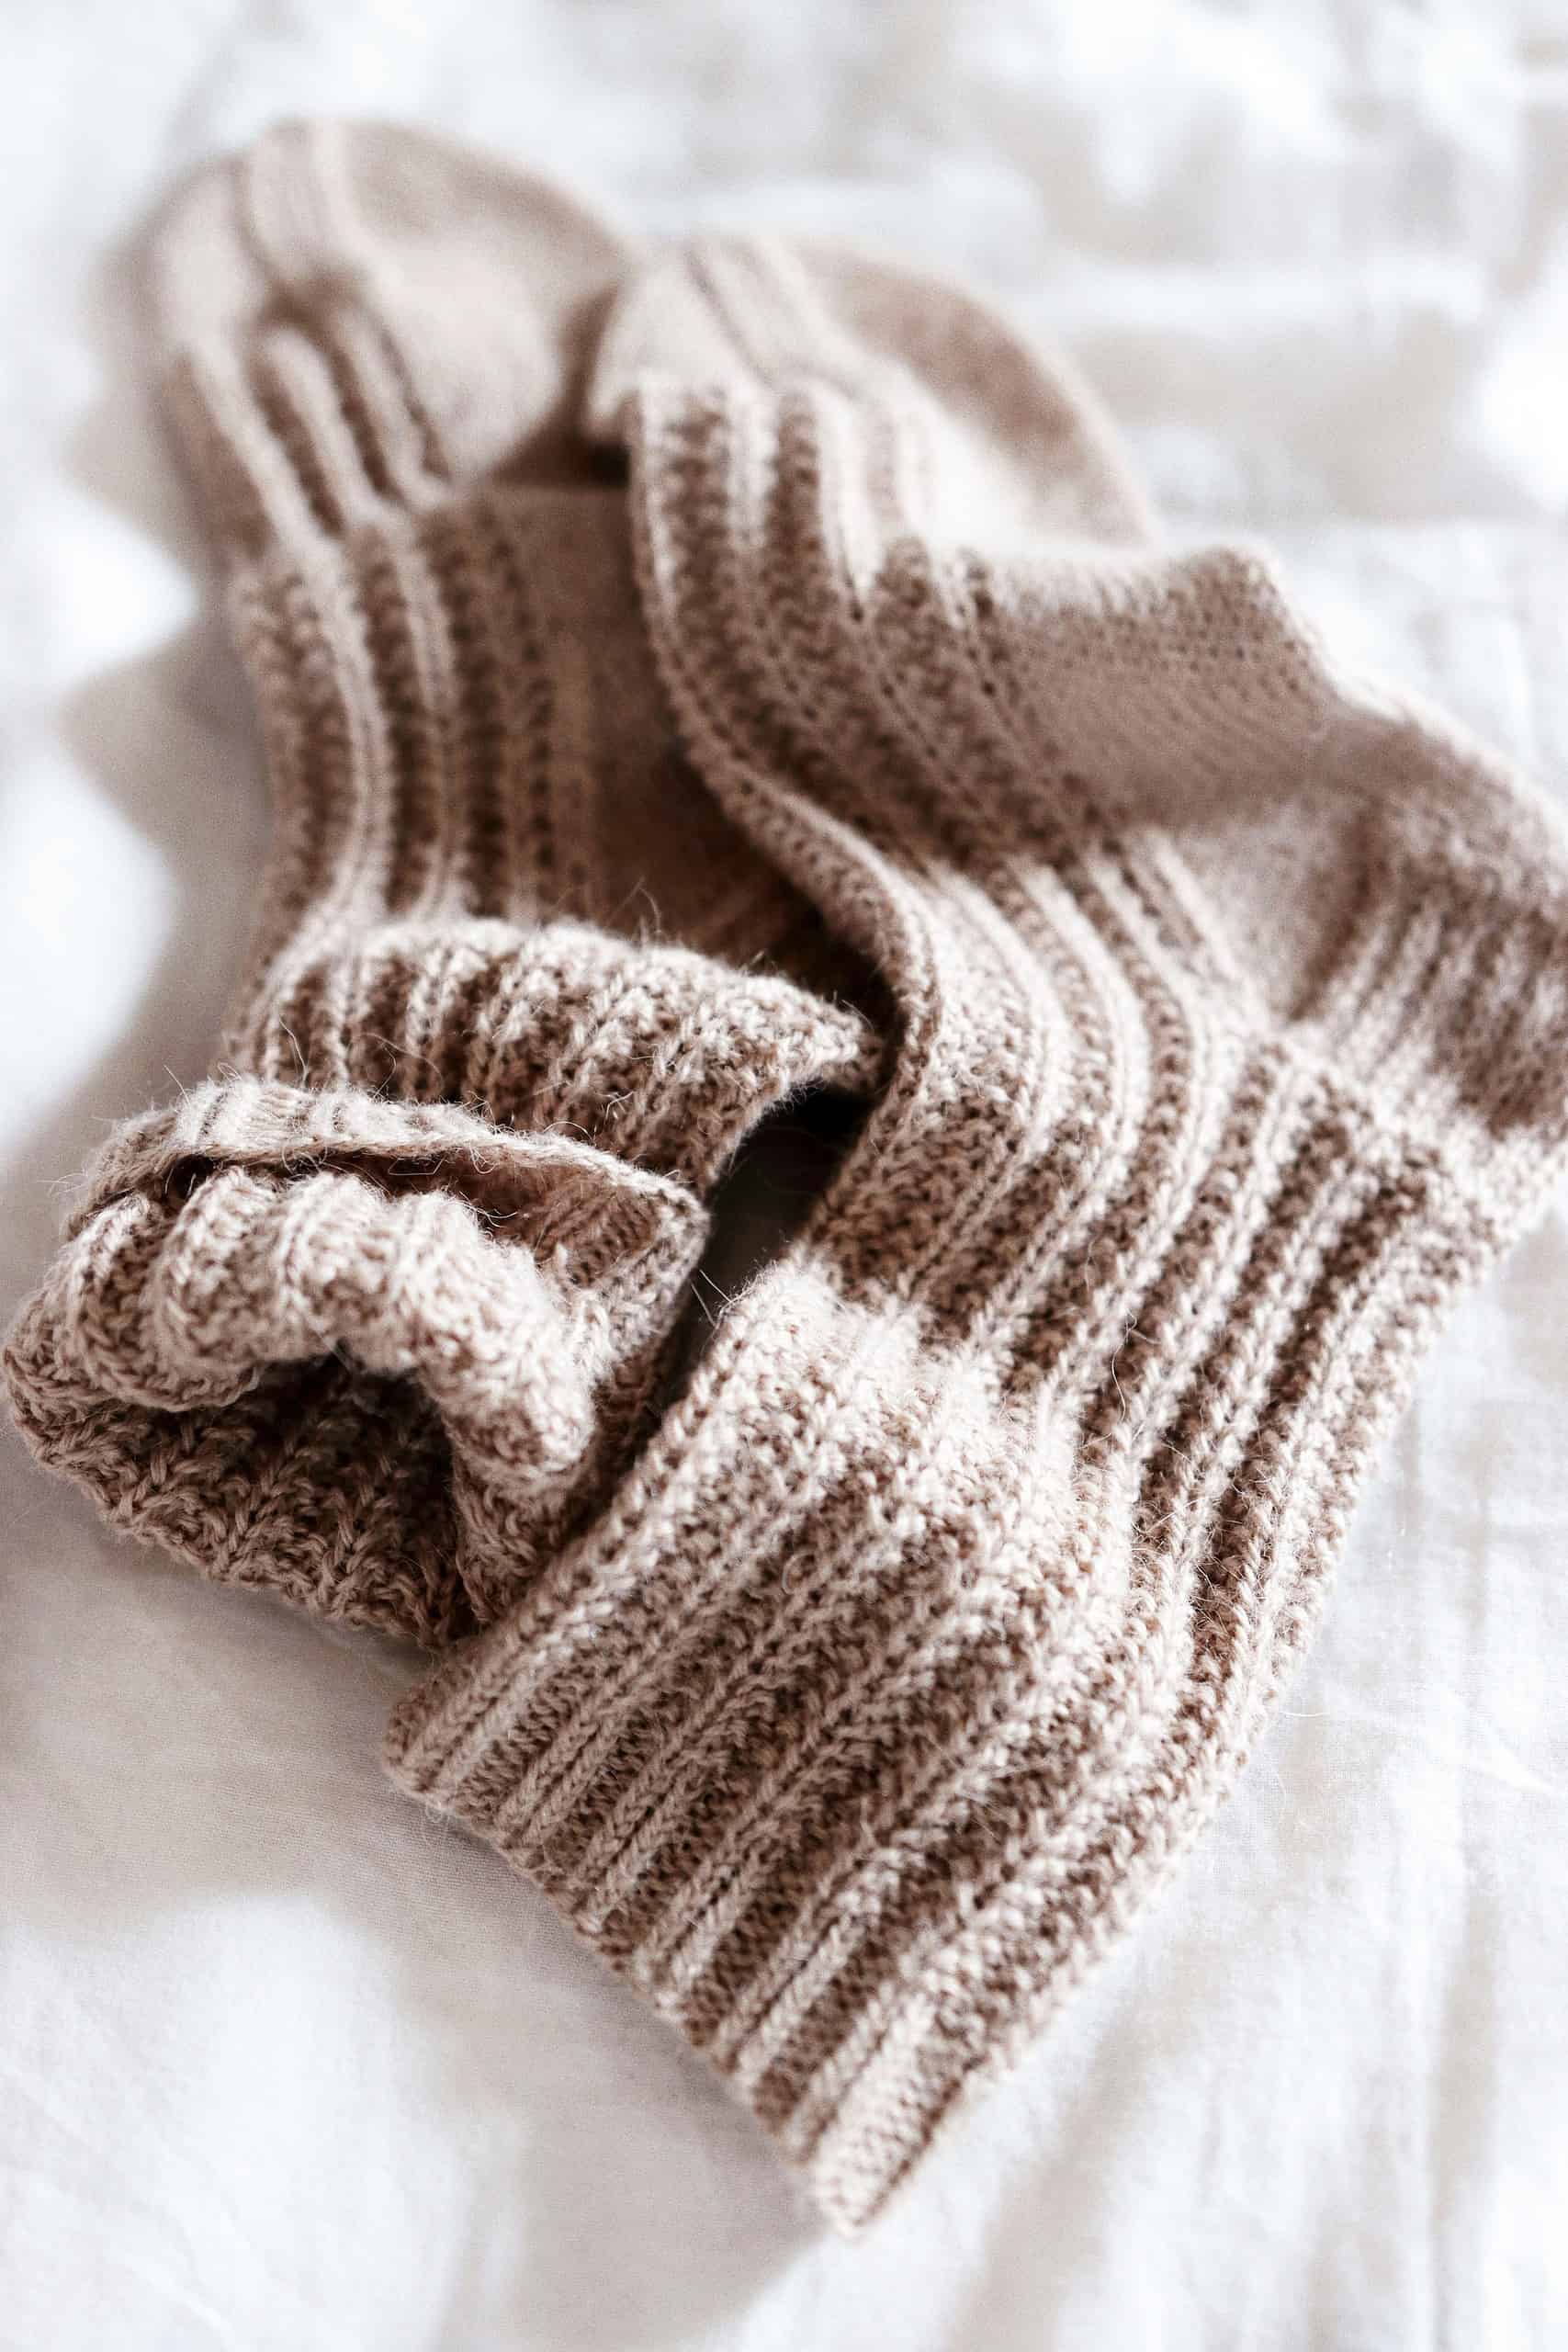 Cozy Socks Knitting Pattern, Chalet Socks, Darling Jadore, Textured Socks